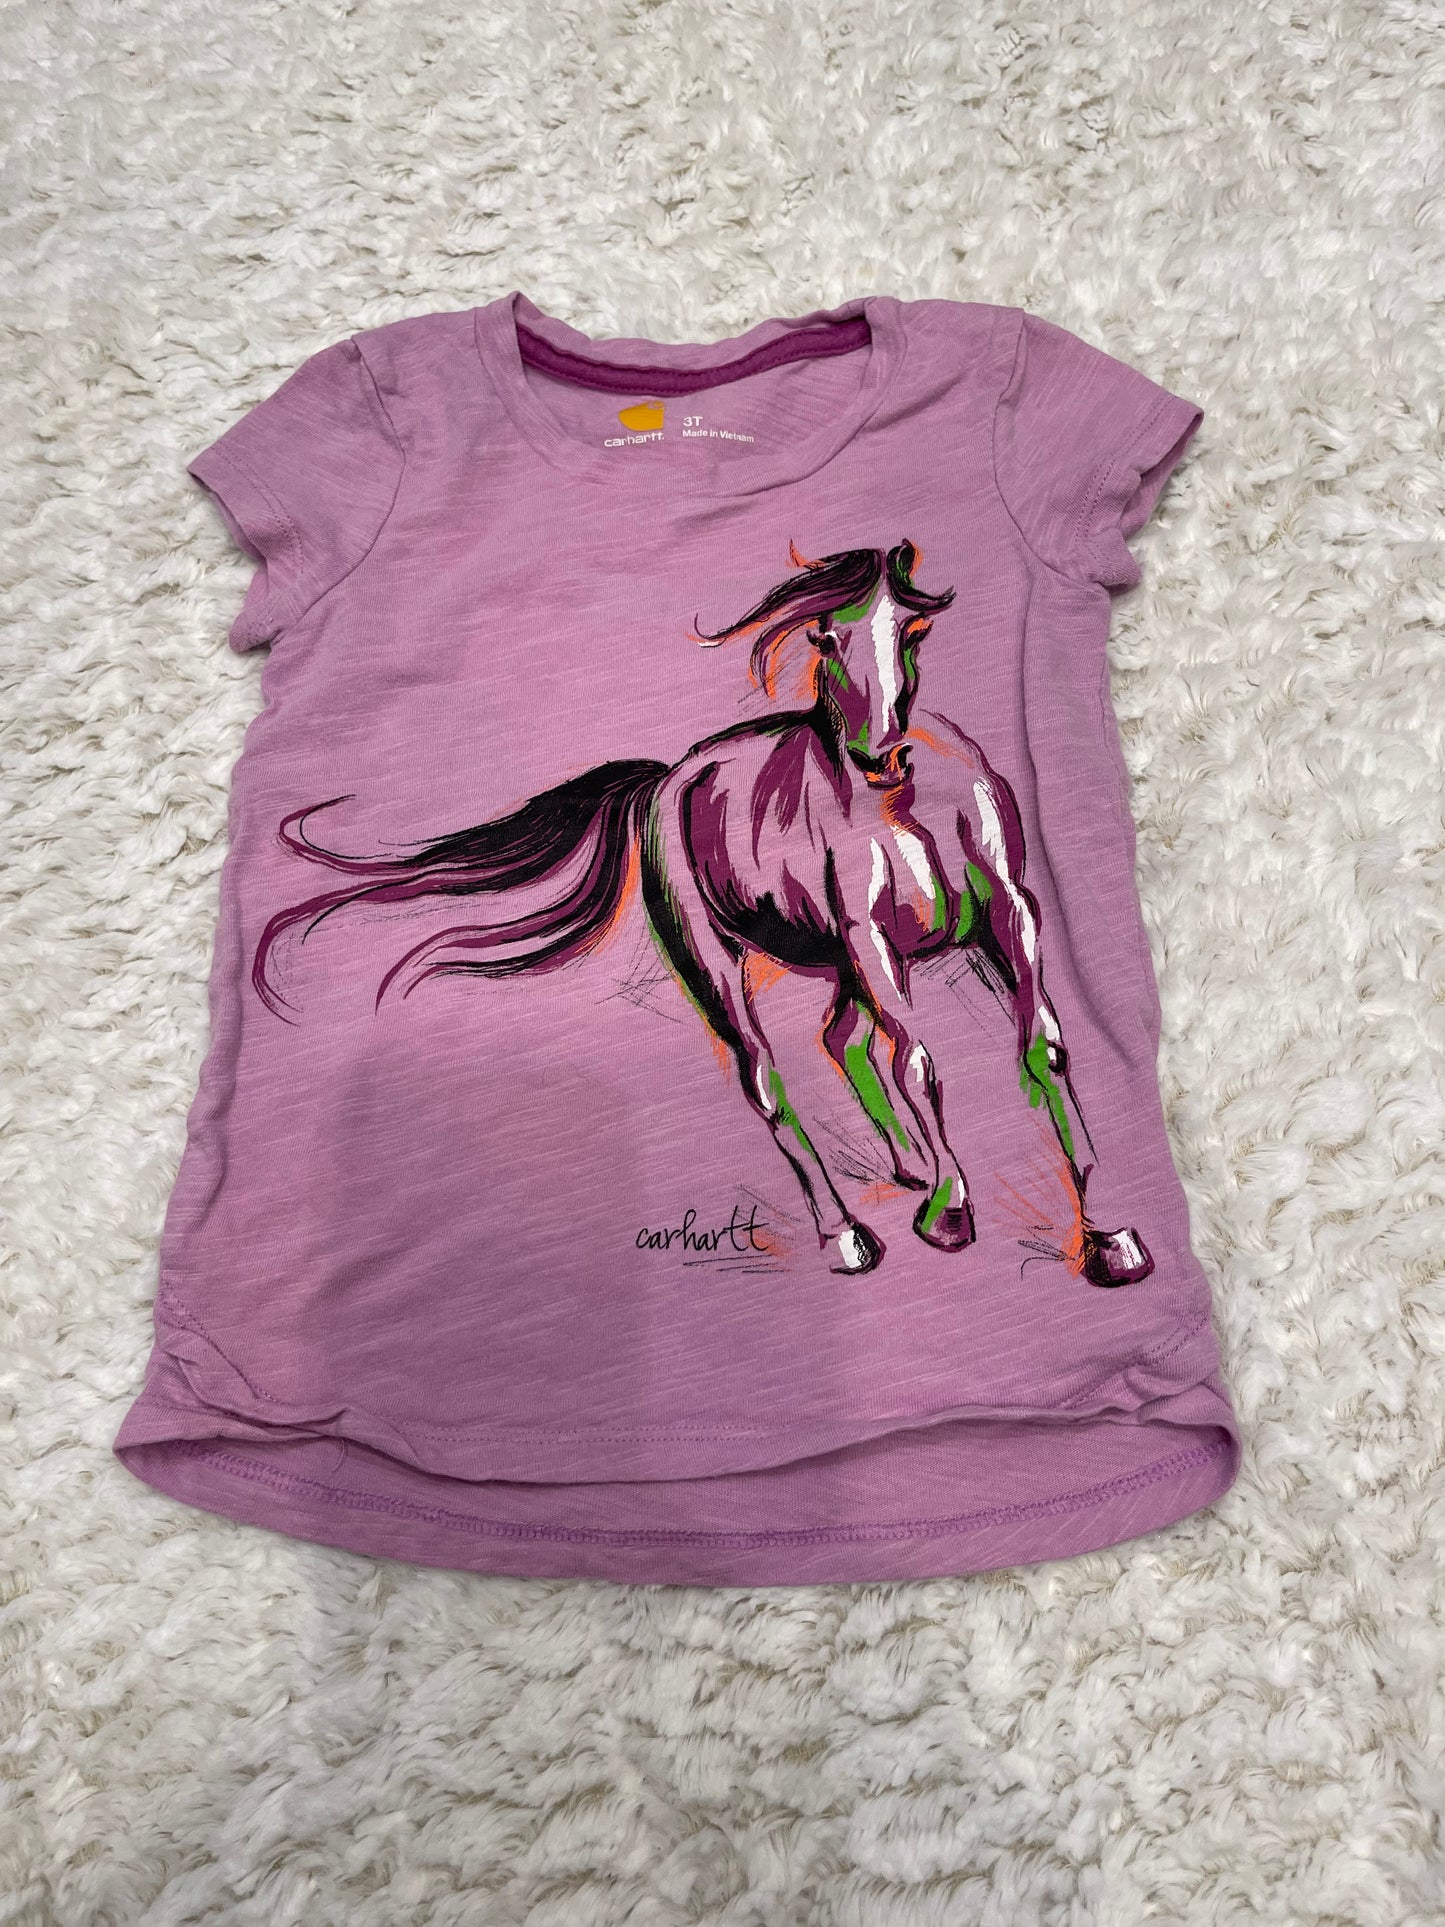 3T carhartt horse tshirt